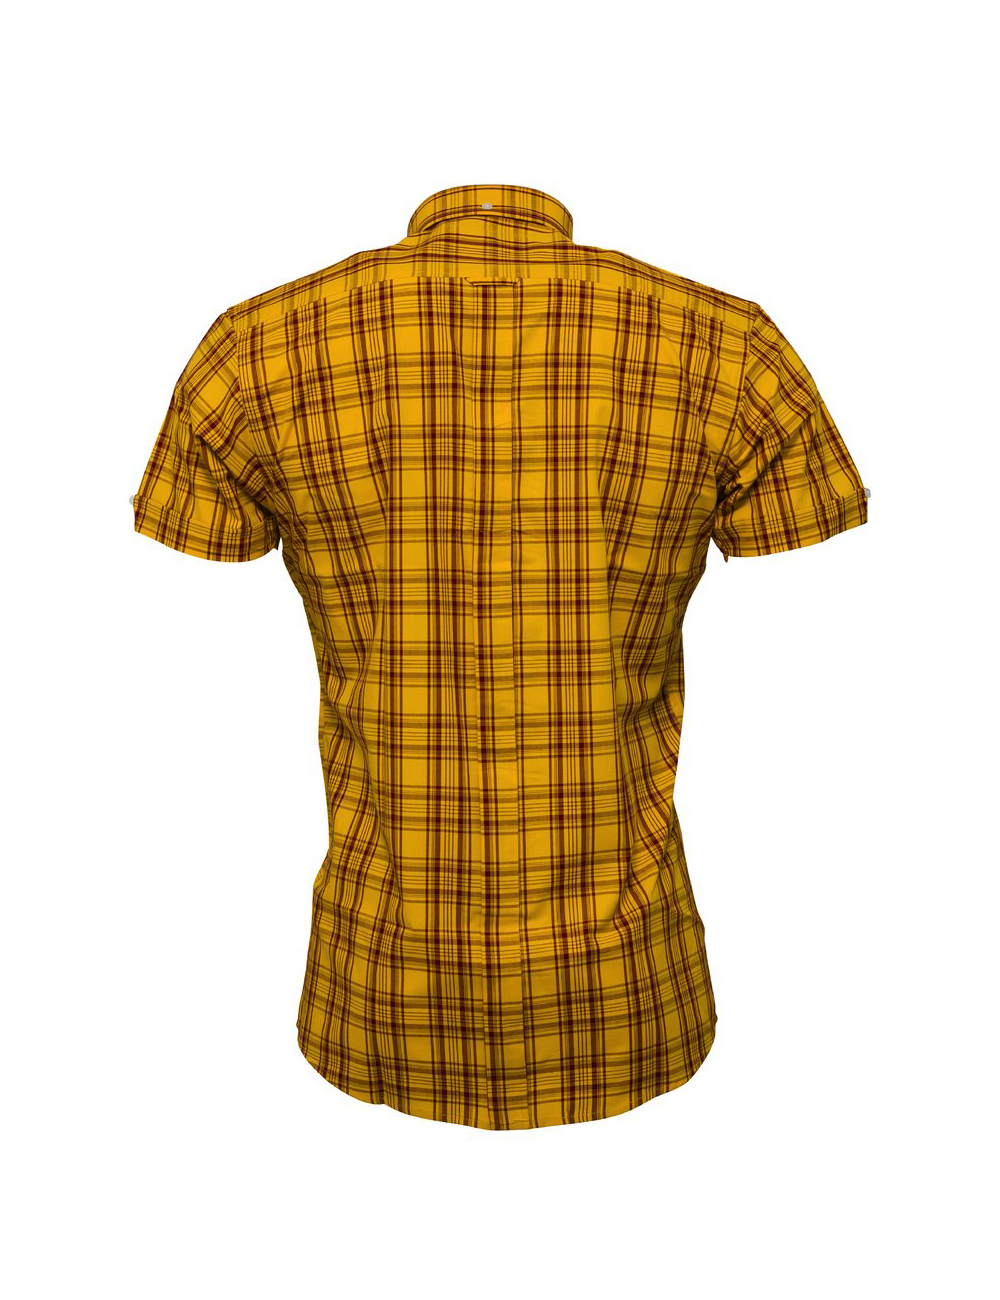 Relco Mustard Burgundy Check Shirt - CK47